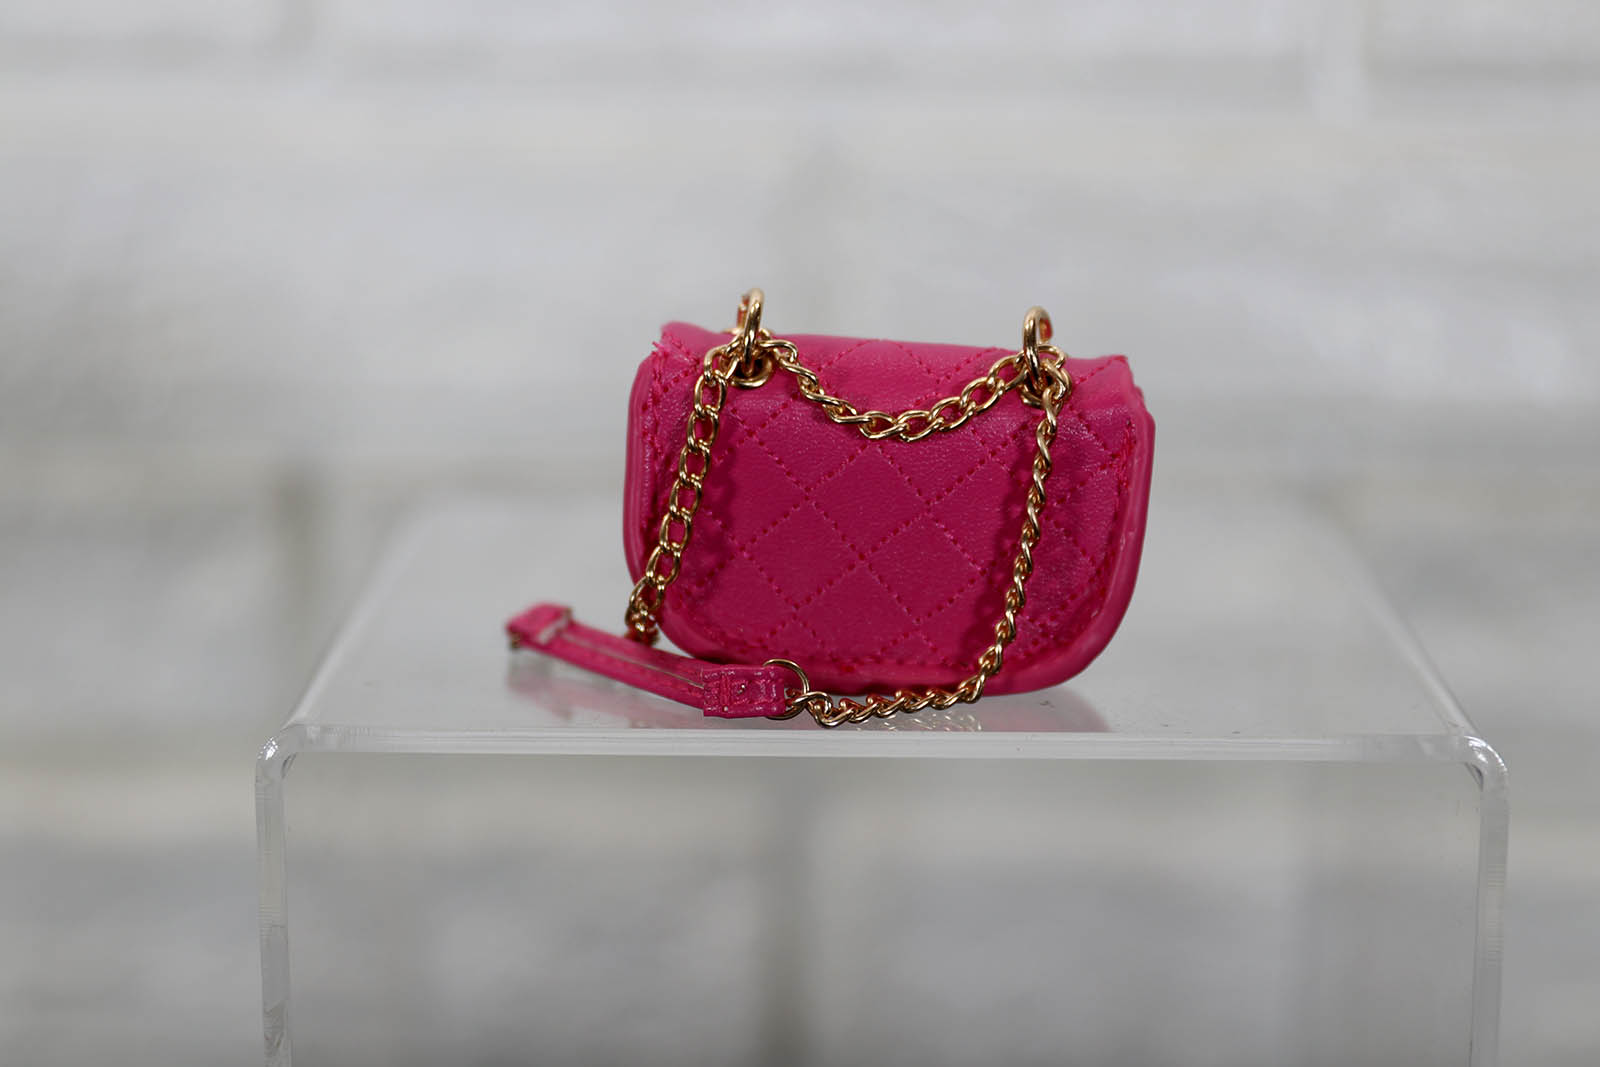 ZURU MINI FASHION Handbag Series 2 Croc Pink Red Mini Bag & Accessories  $15.00 - PicClick AU